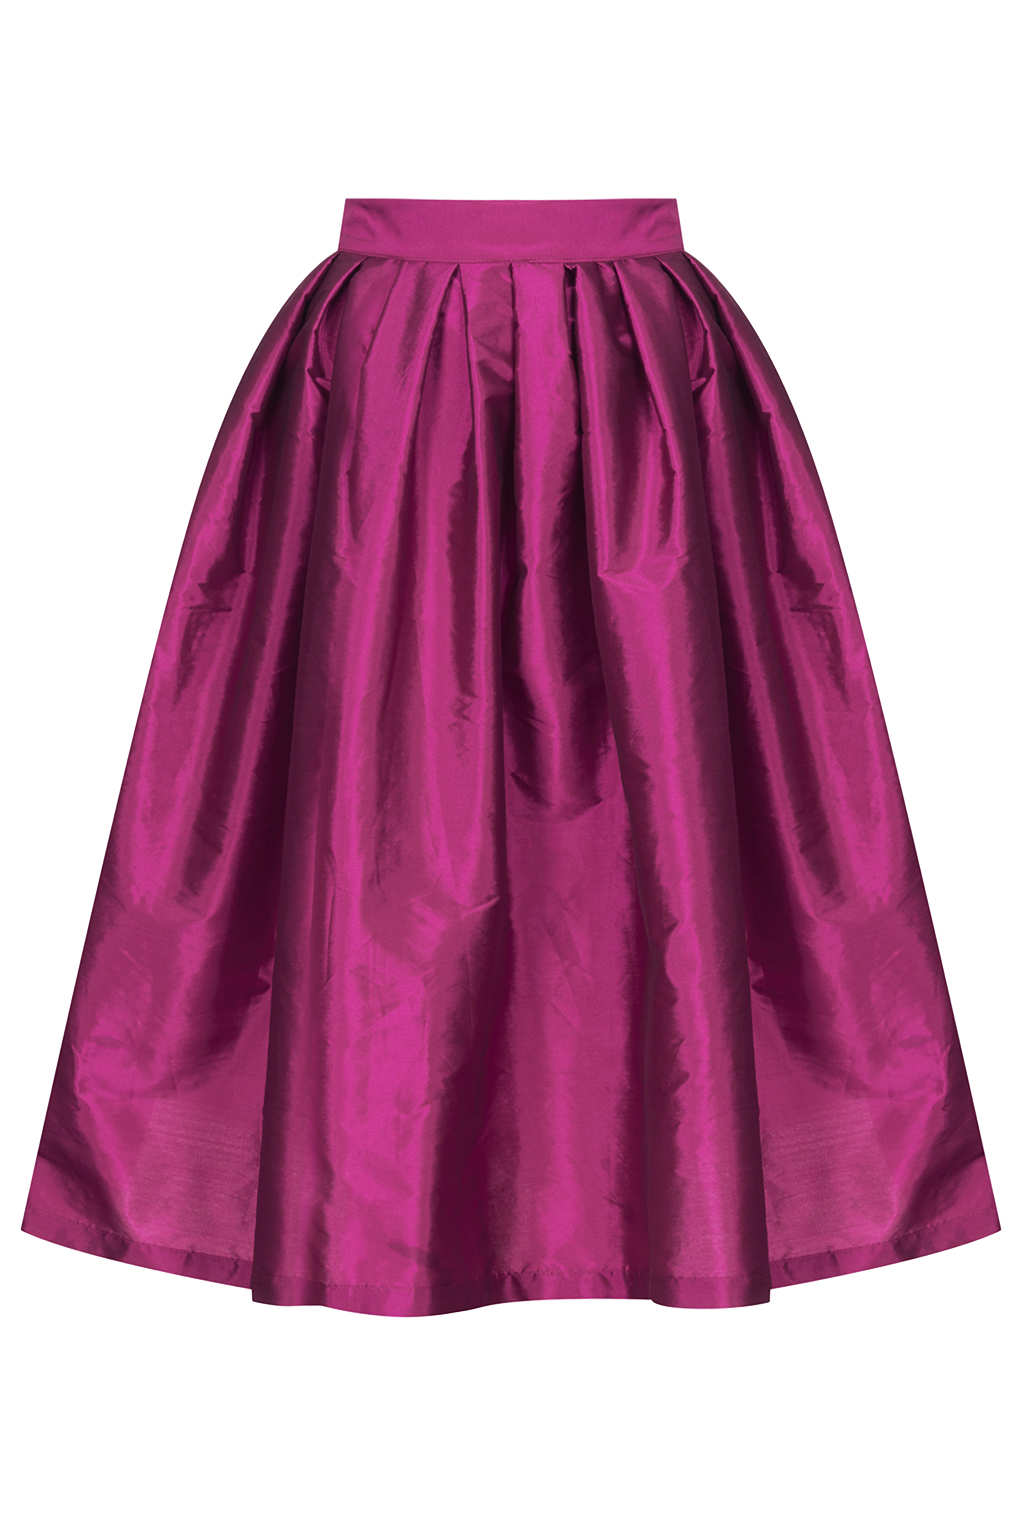 Lyst Topshop Tafetta Midi Skirt  in Pink 